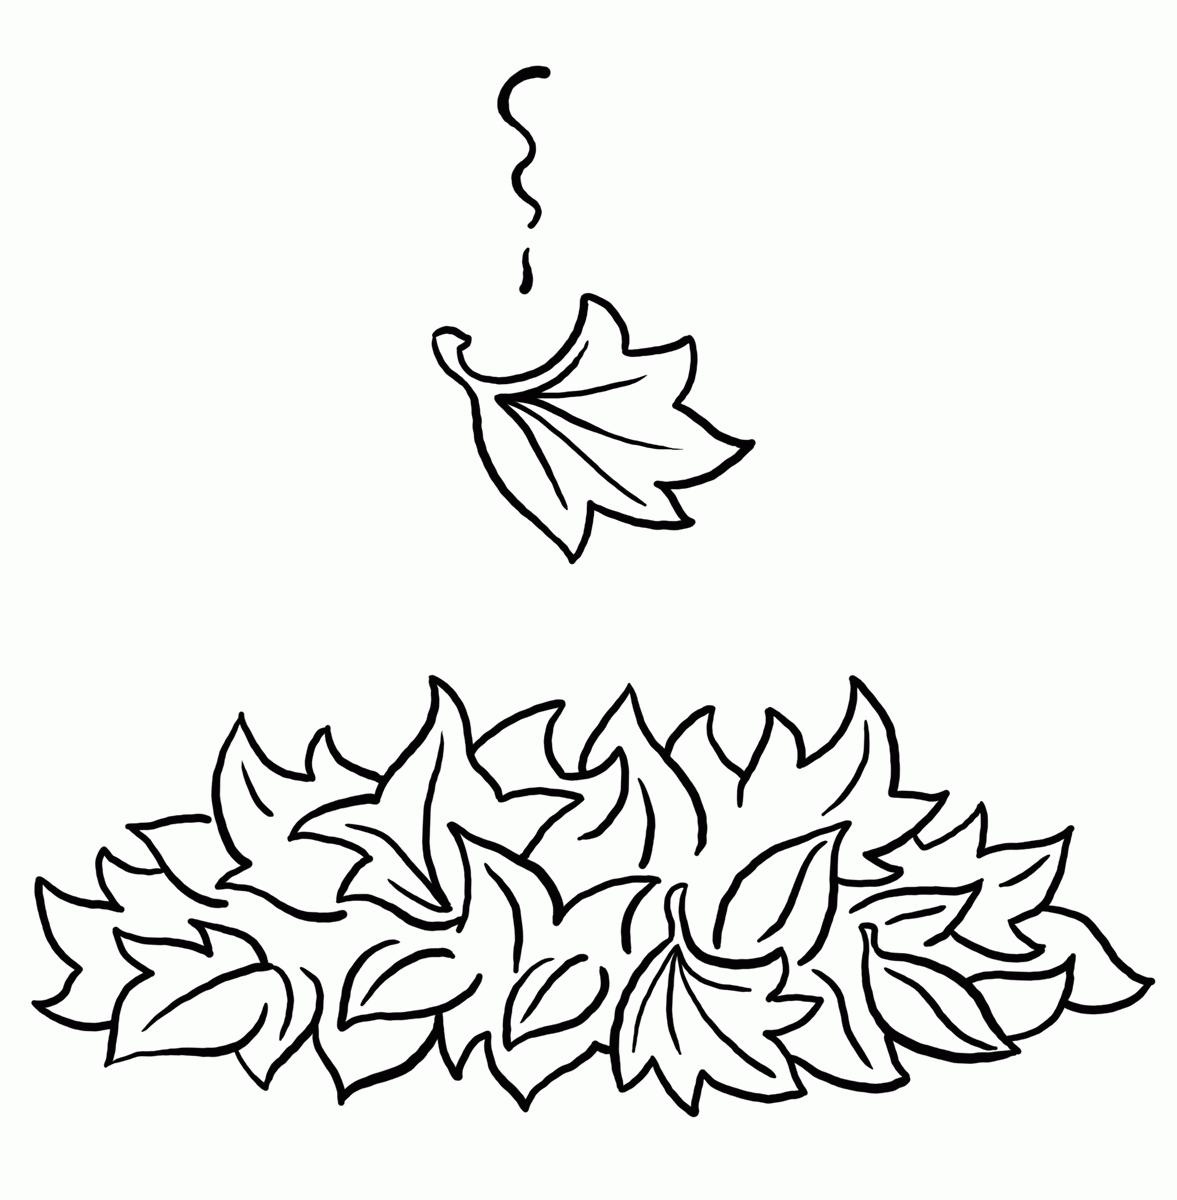 Pot Leaf Coloring Pages - Cliparts.co